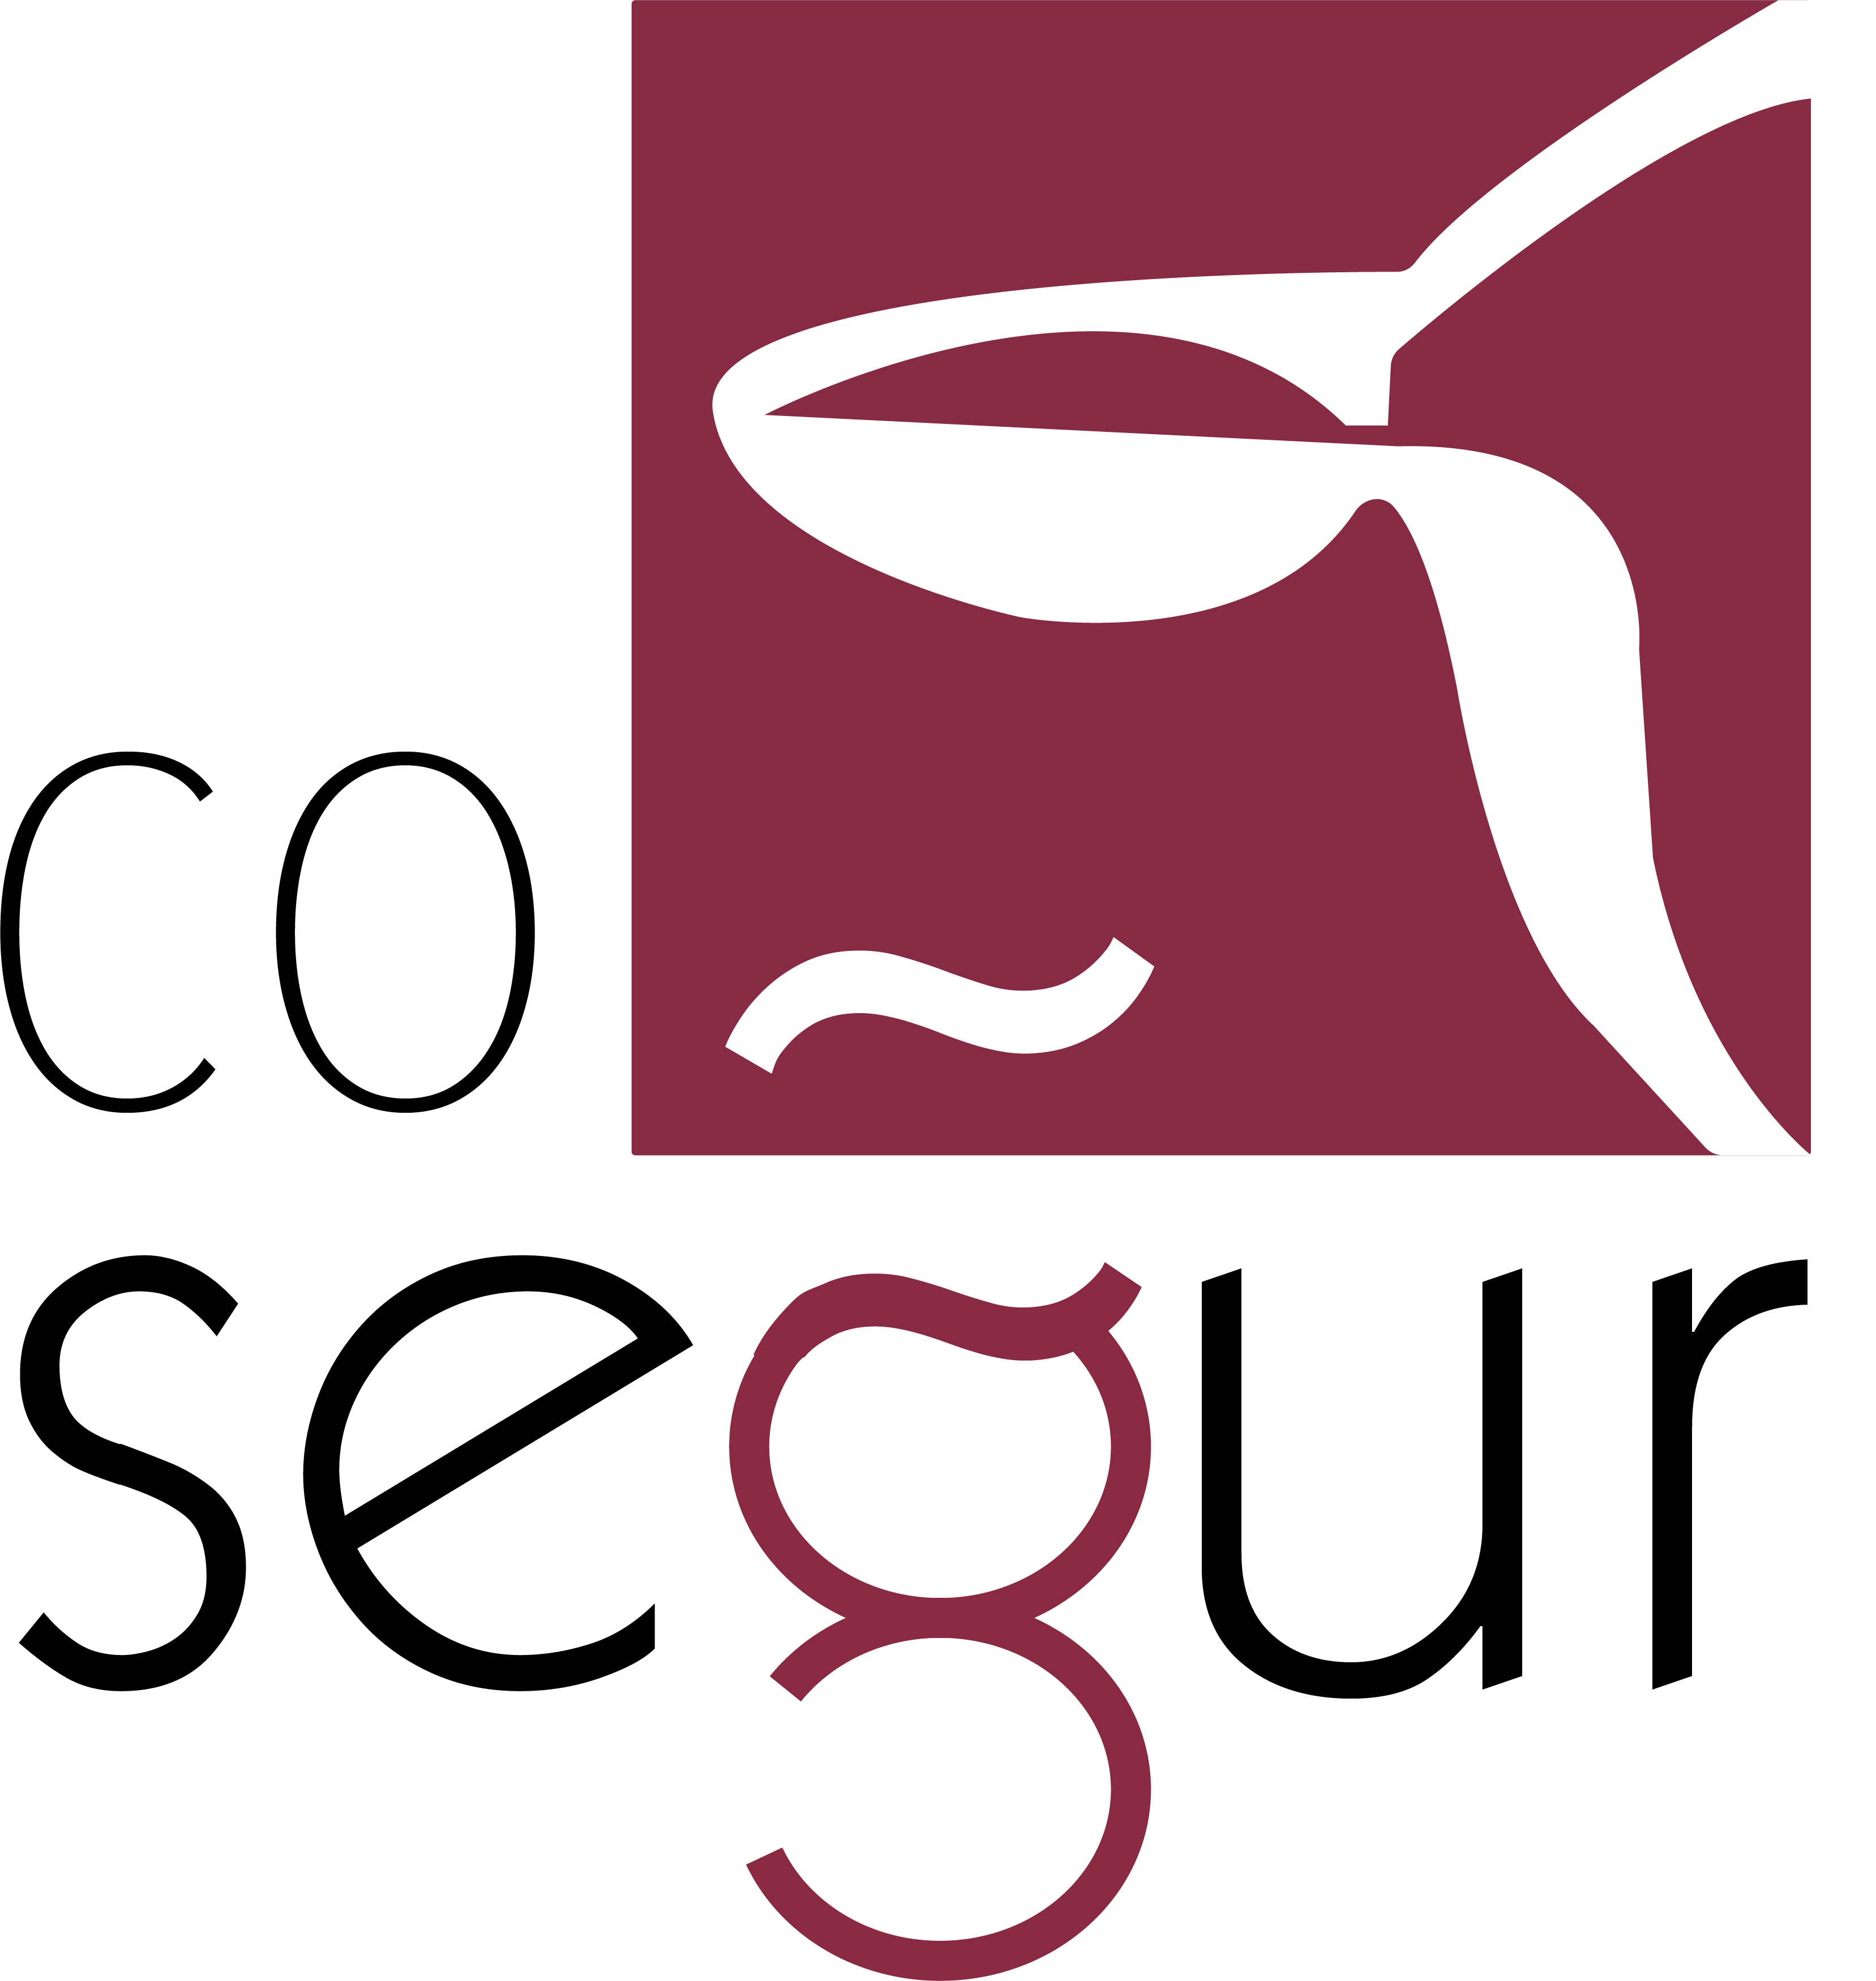 Cosegur logo - Sabor Granada